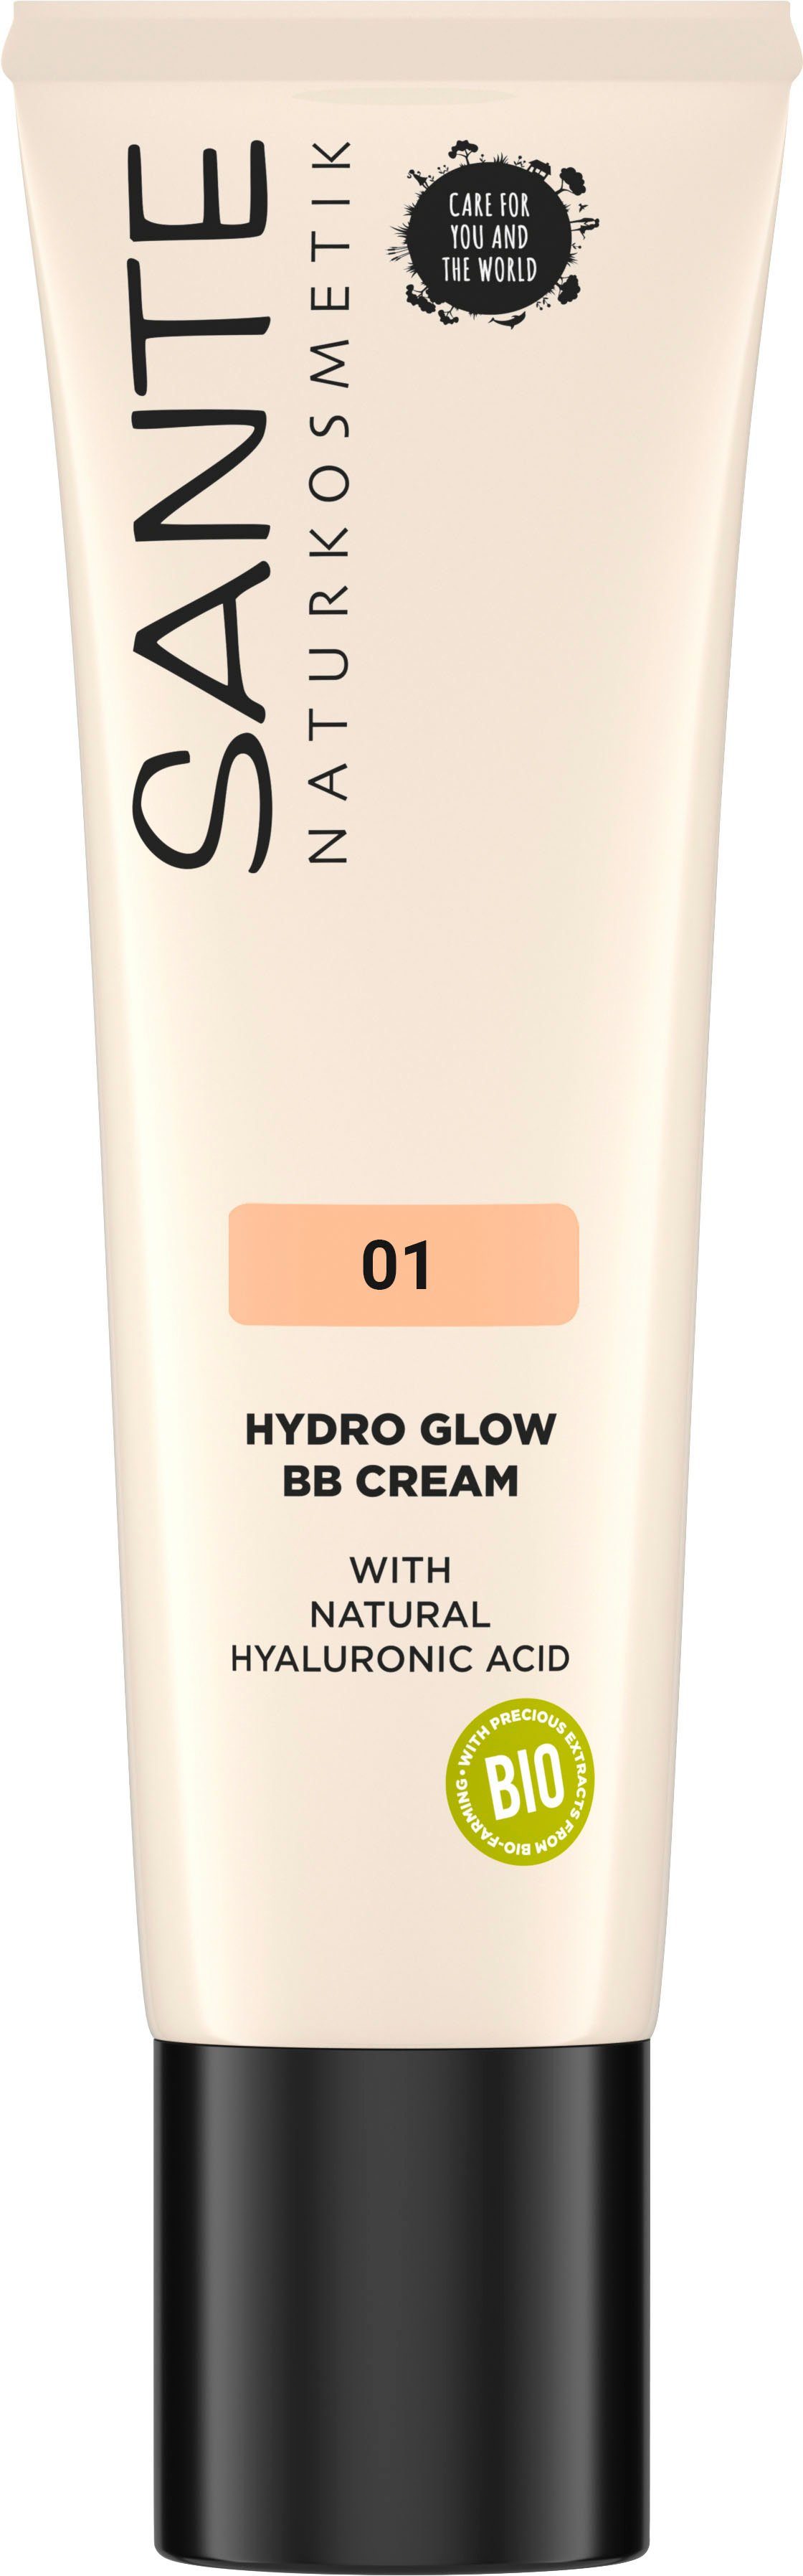 SANTE Make-up Sante Hydro Glow BB Cream 01 Light-Medium